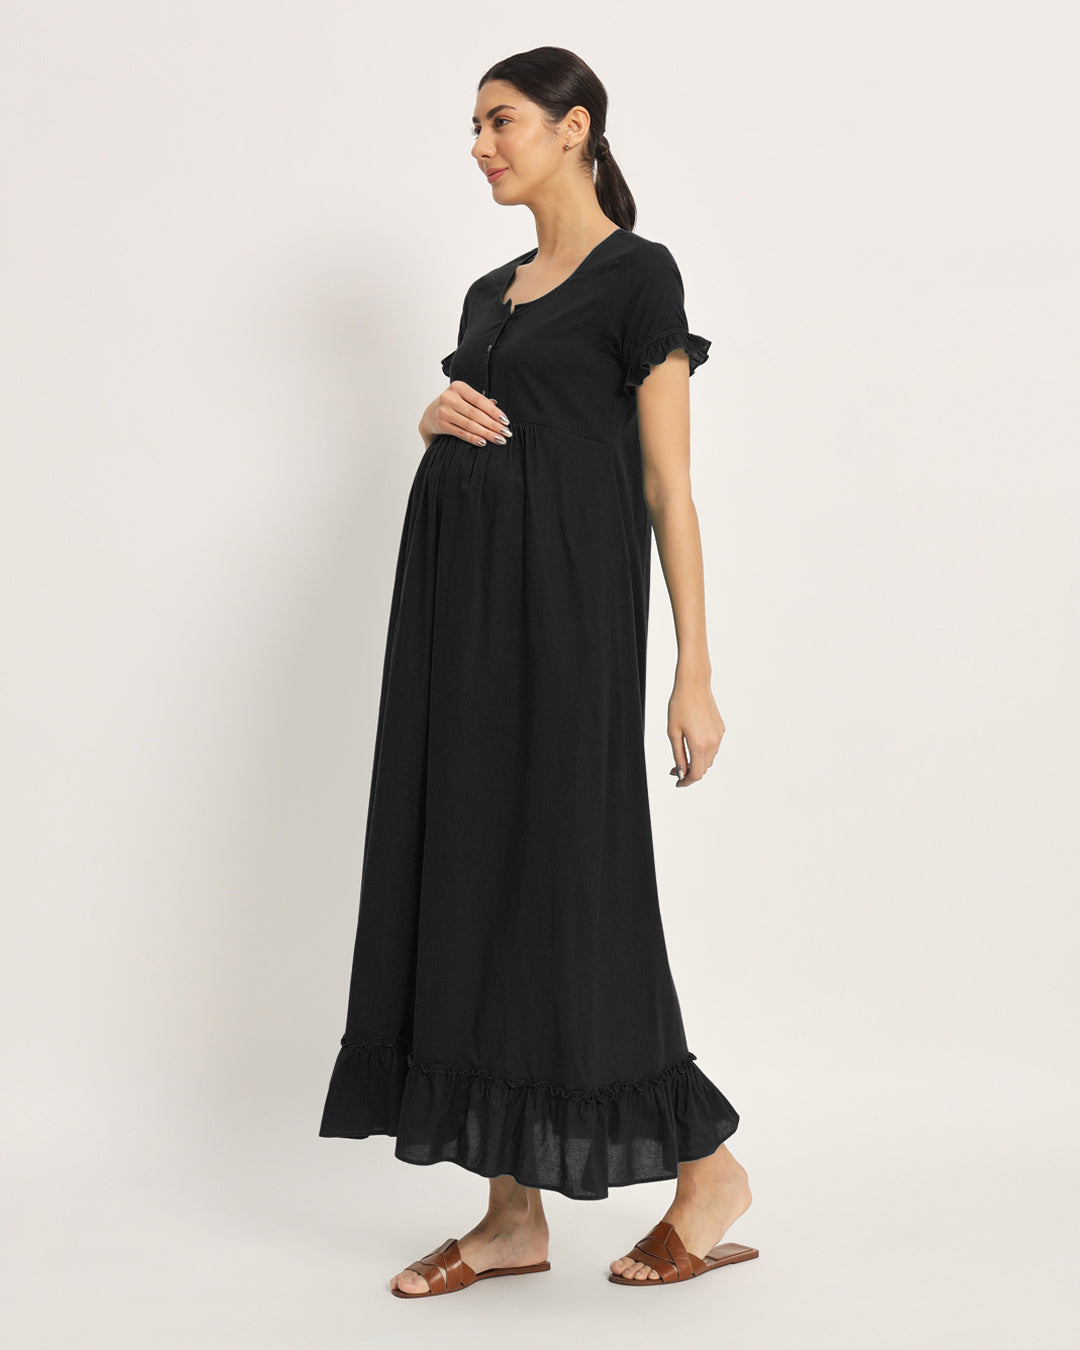 Combo: Black & Russet Red Bumpin' & Stylin' Maternity & Nursing Dress - Set of 2